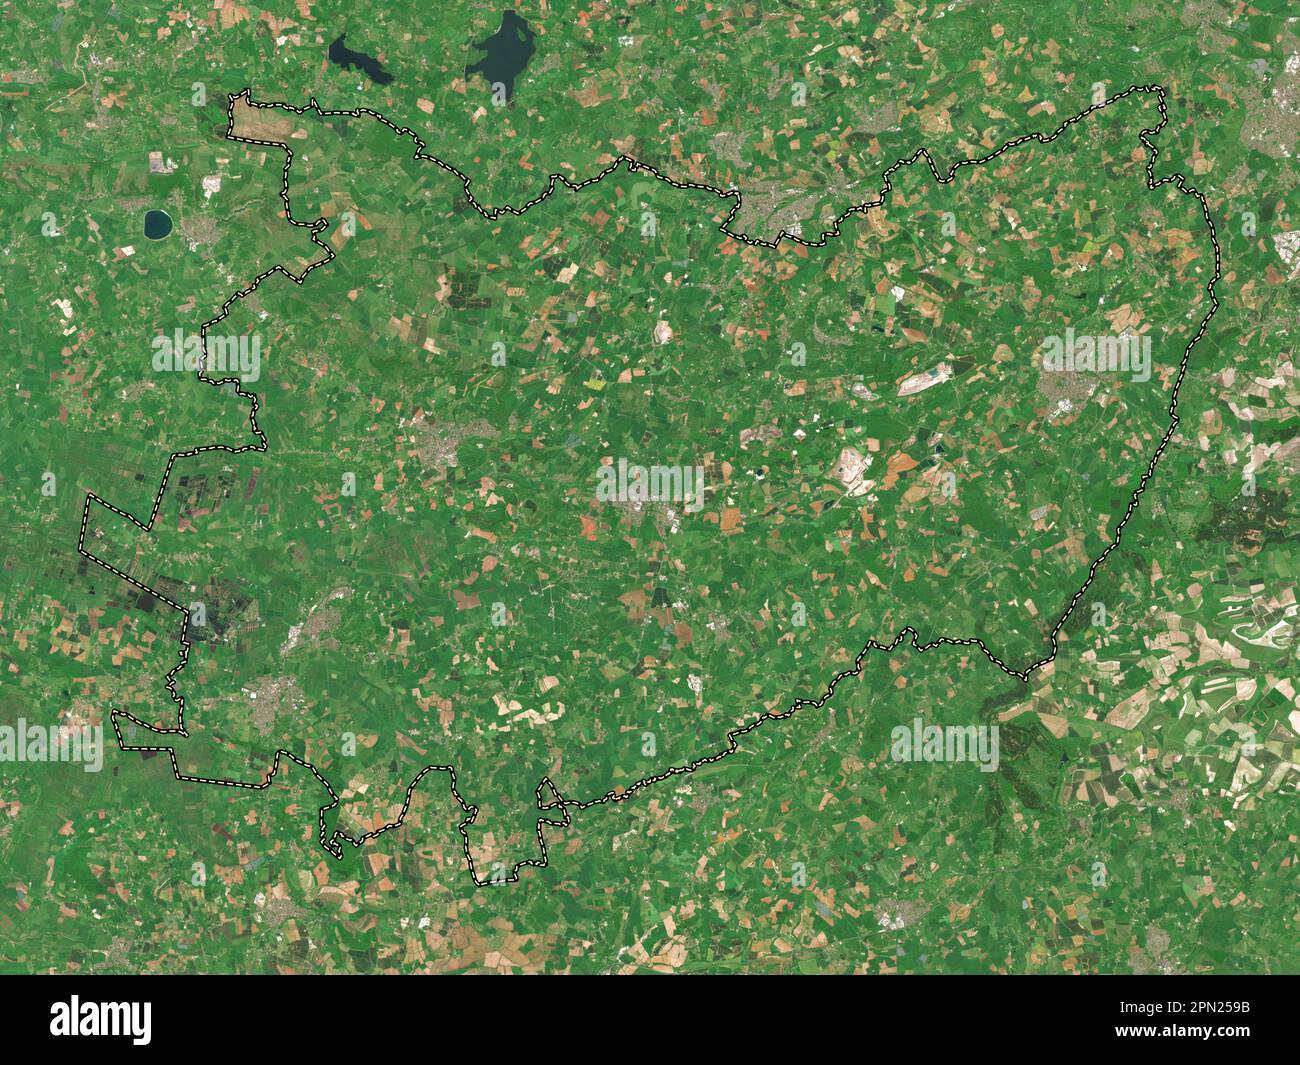 Mendip, non metropolitan district of England - Great Britain. Low resolution satellite map Stock Photo